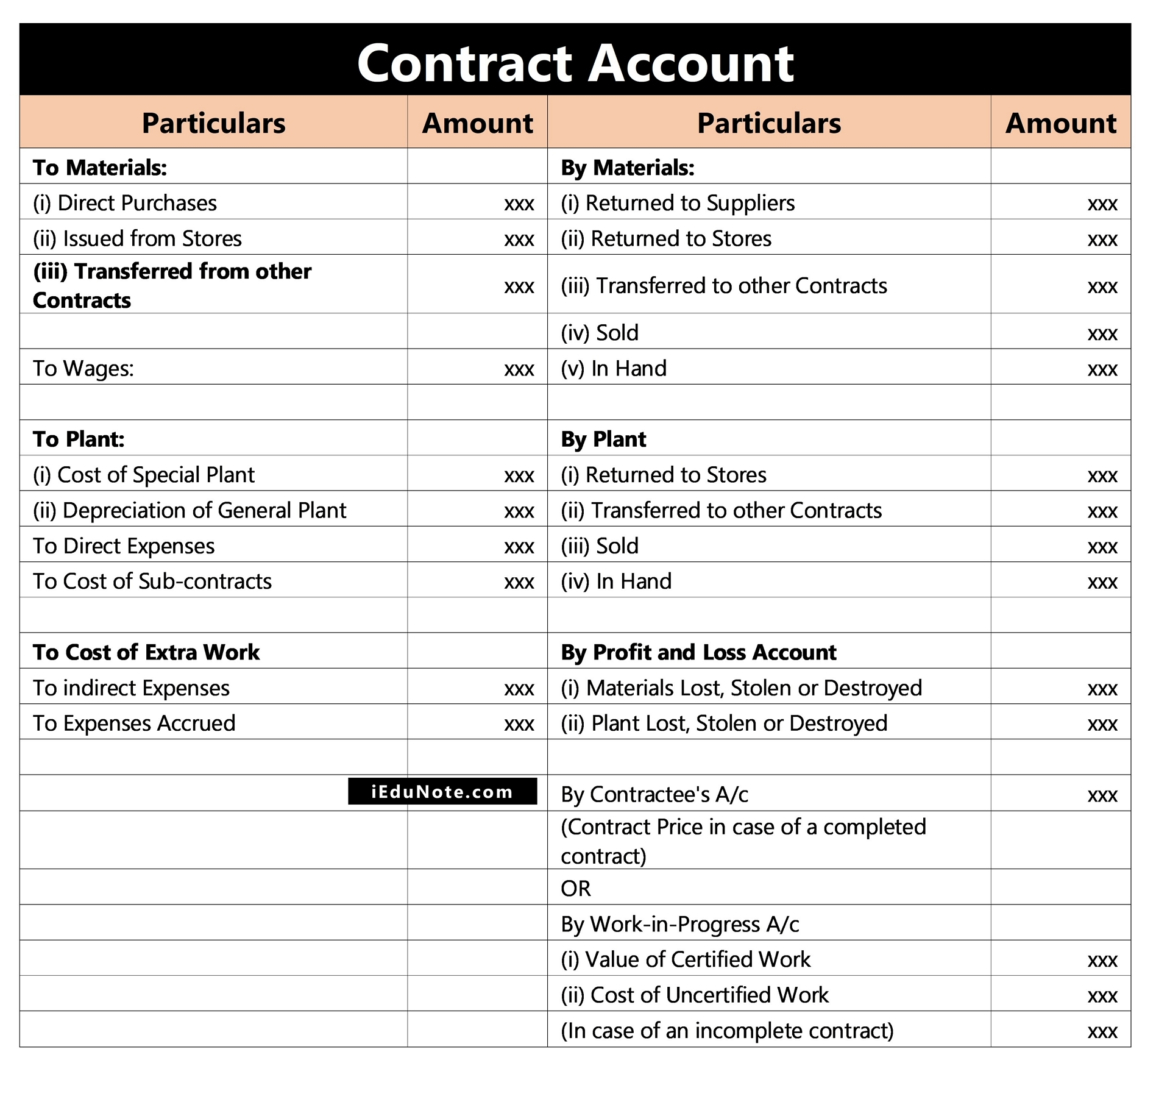 Contract Account